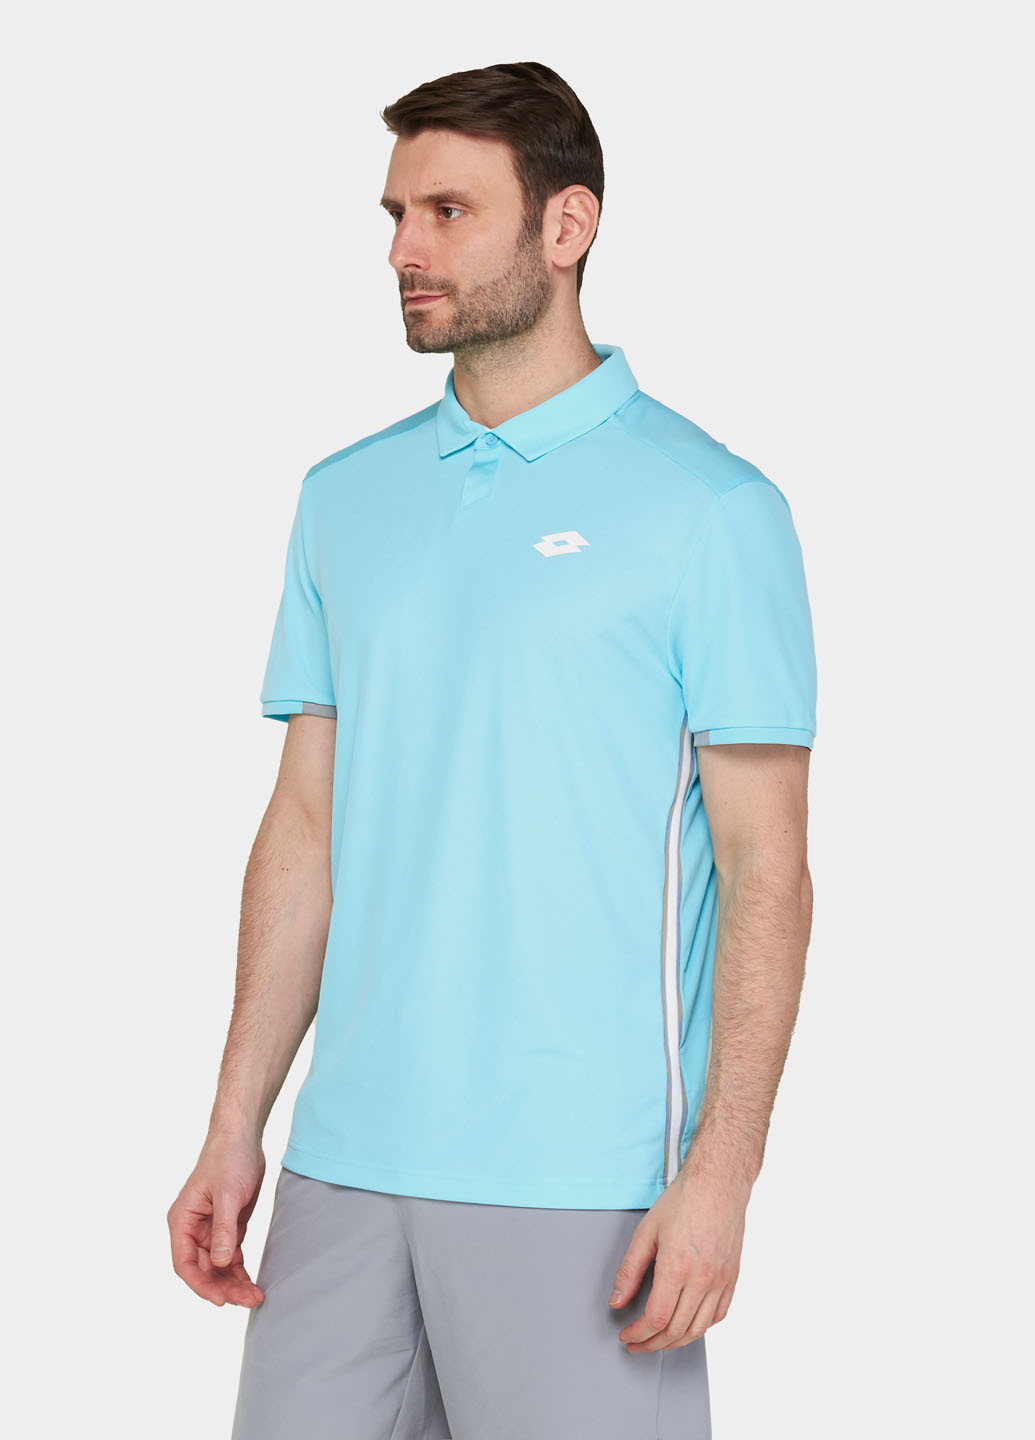 Голубой футболка-поло для мужчин Lotto с логотипом